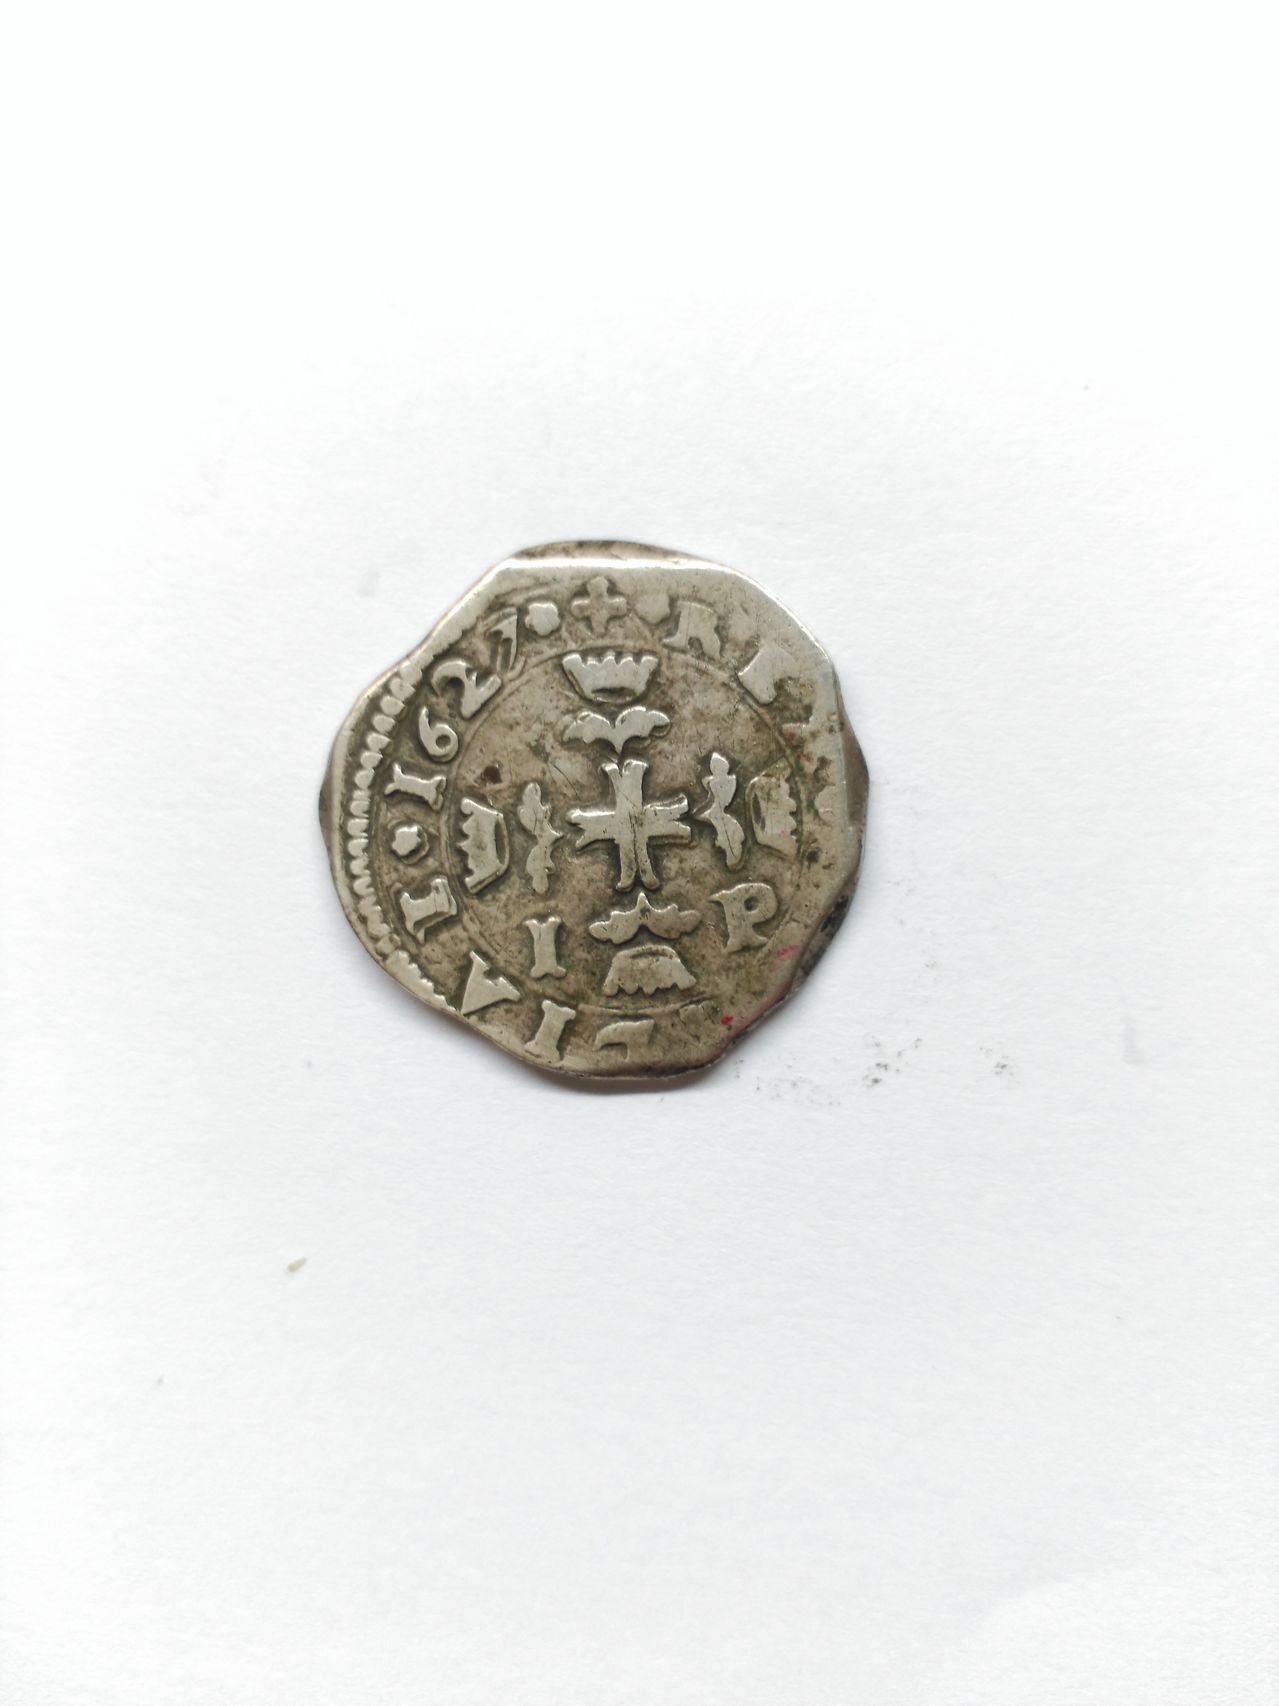 3 taris de Felipe IV año 1627 de Sicilia IMG_20160202_183002